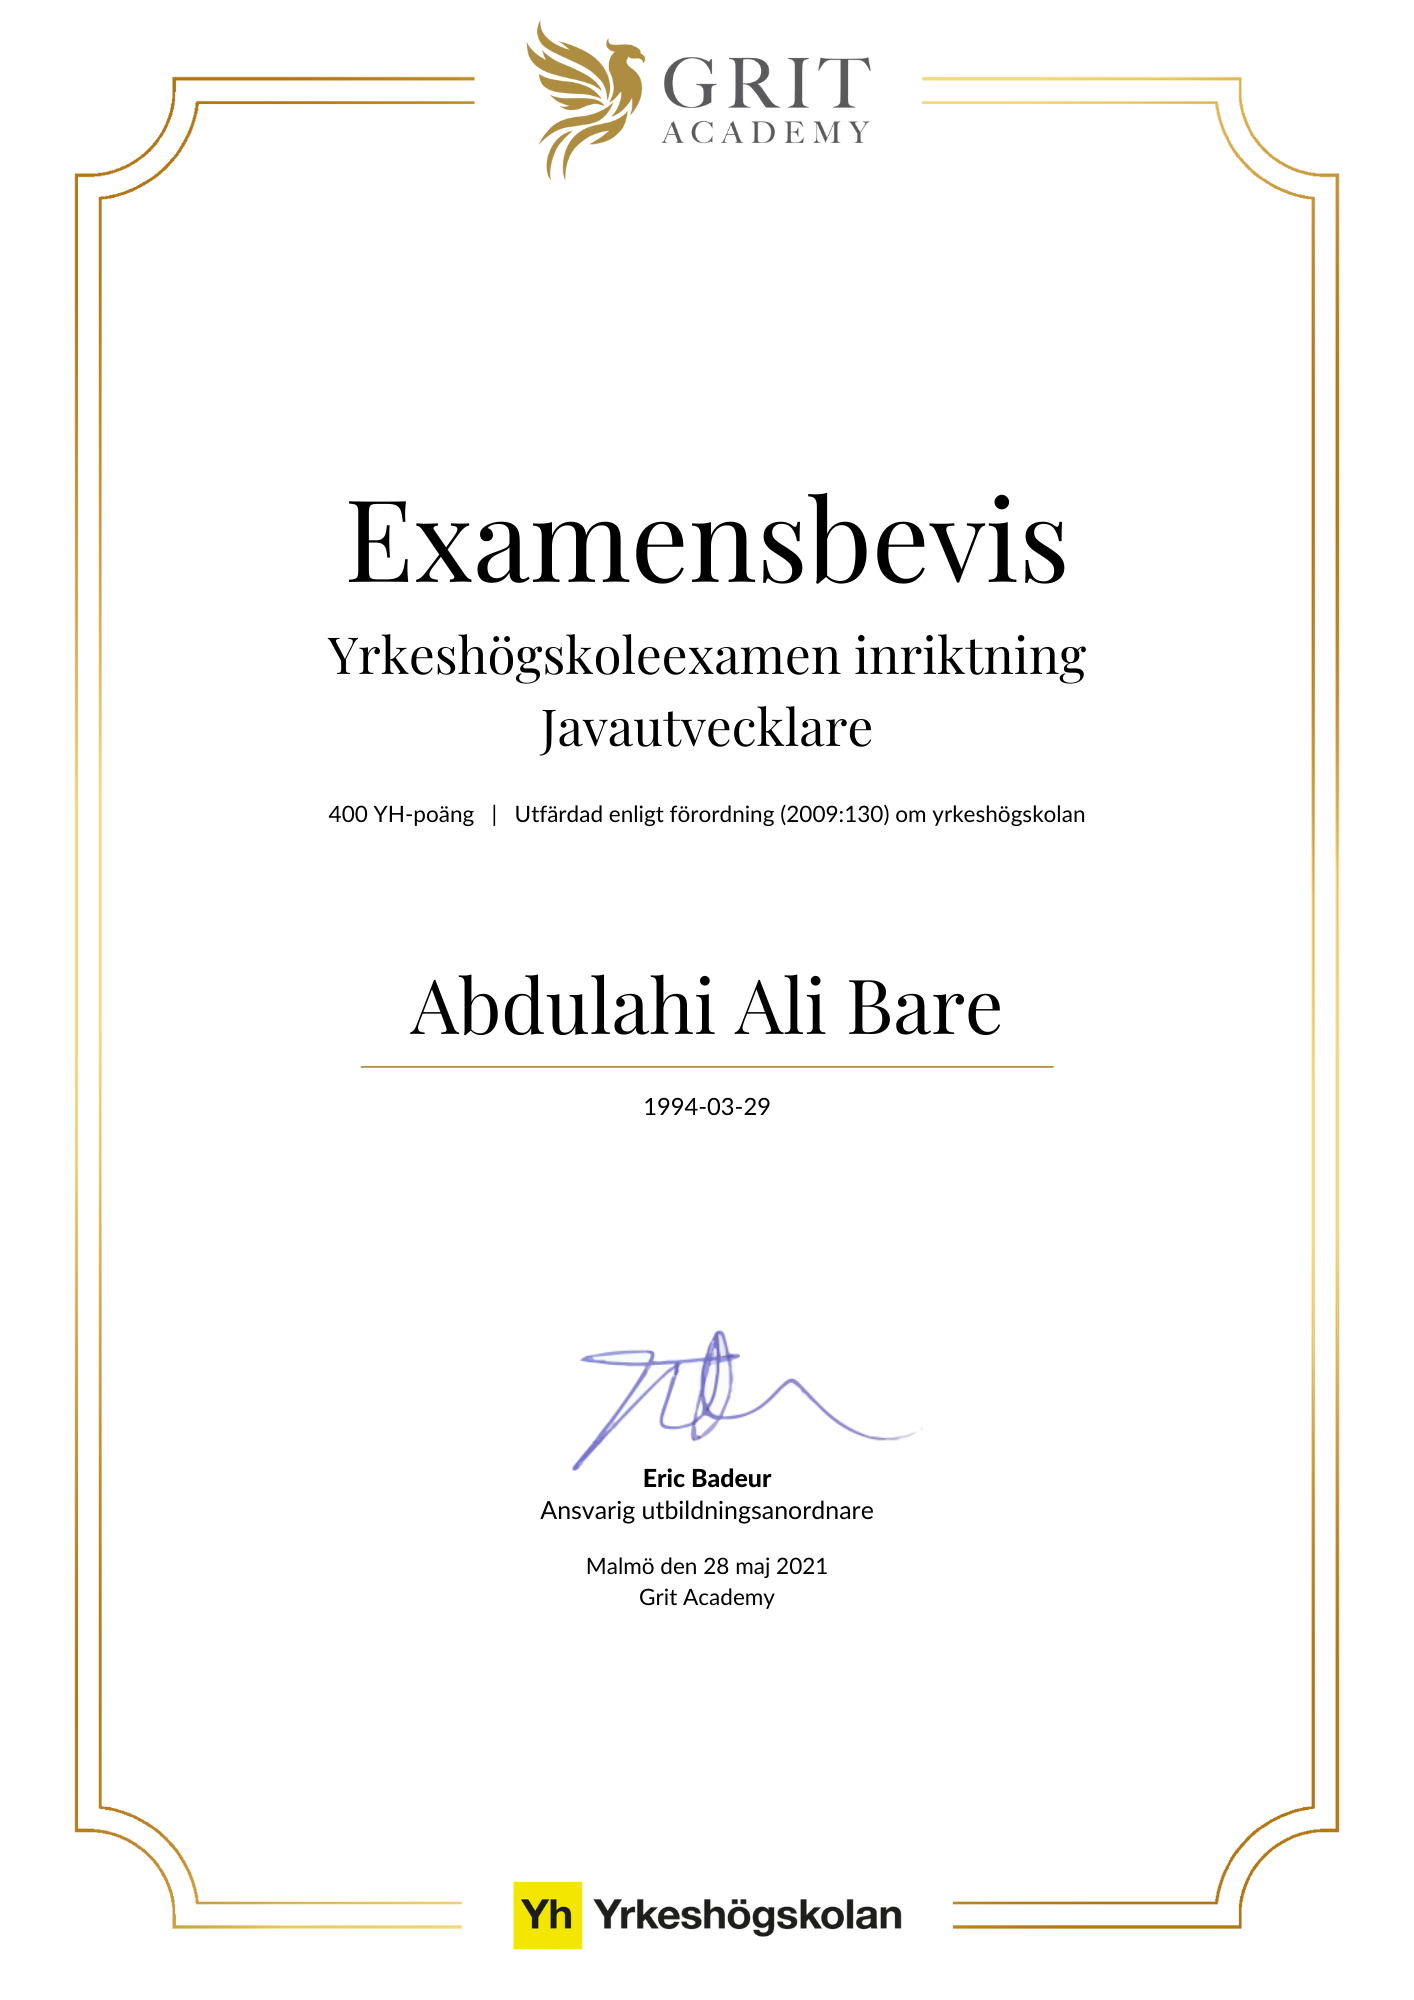 Examensbevis Abdulahi Ali Bare - 1